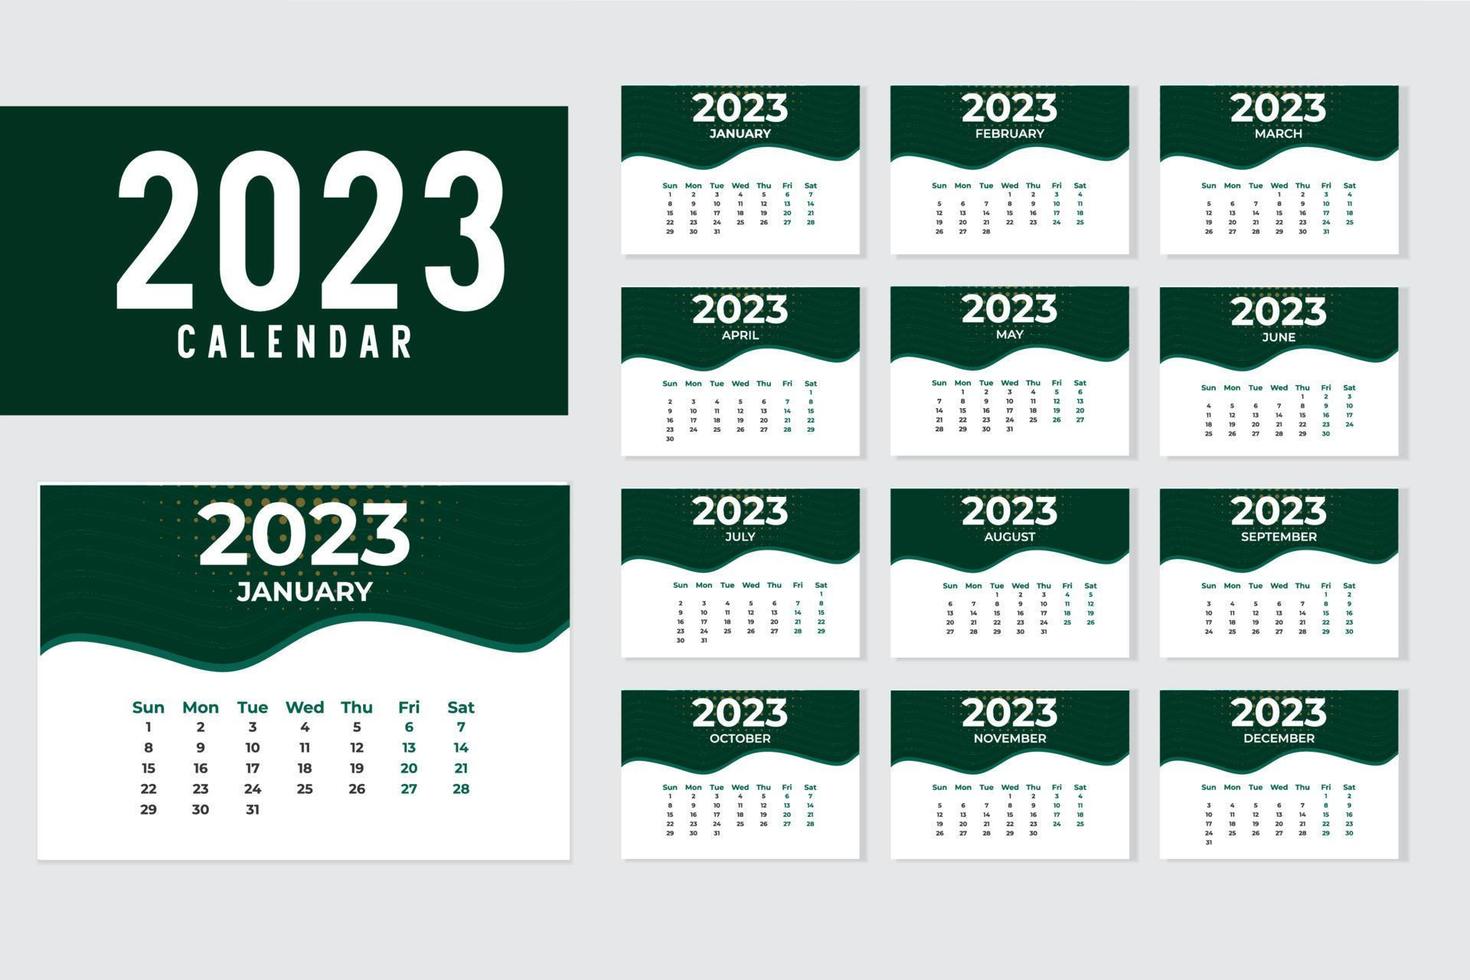 skrivbord kalender 2023 mall design vektor